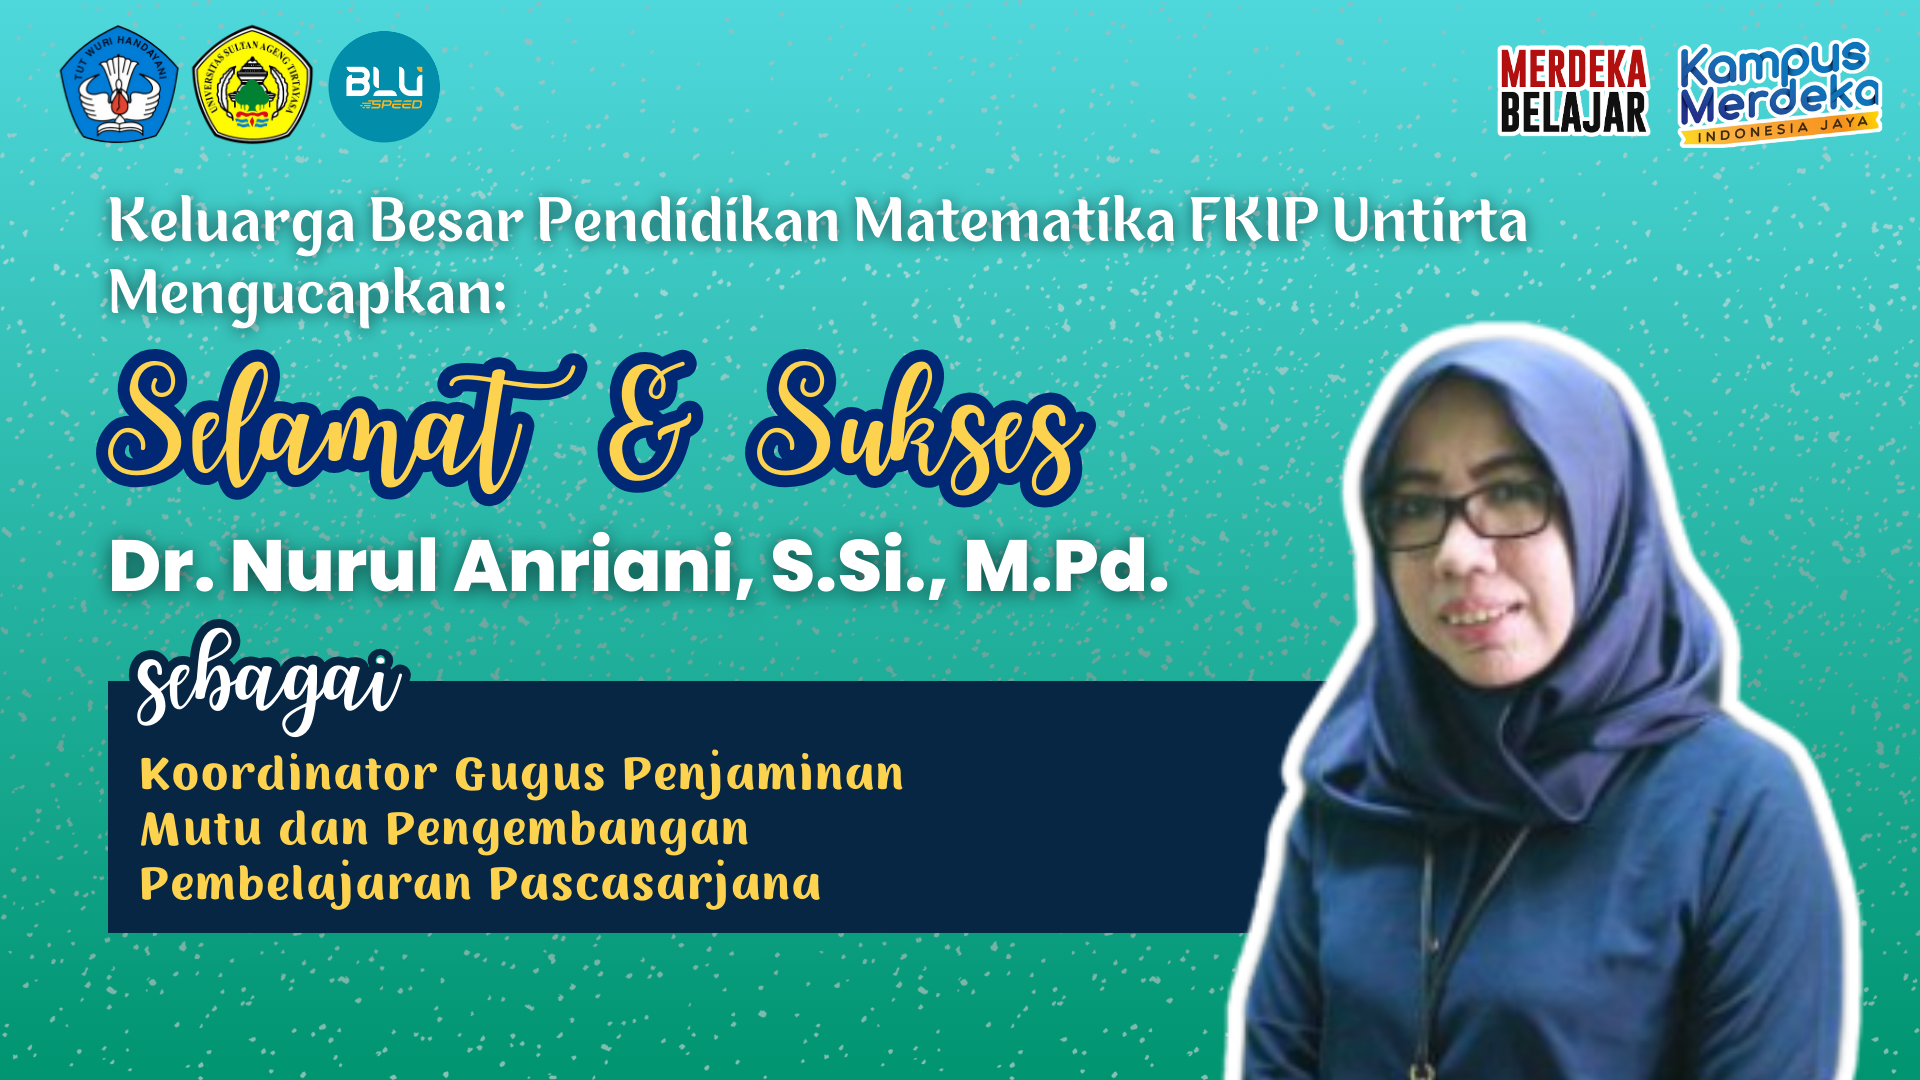 Selamat & Sukses  Kepada Dr. Nurul Anriani, S.Si.,M.Pd. atas diraihnya jabatan Koordinator Gugus Penjaminan Mutu dan Pengembangan Pembelajaran Pascasarjana.